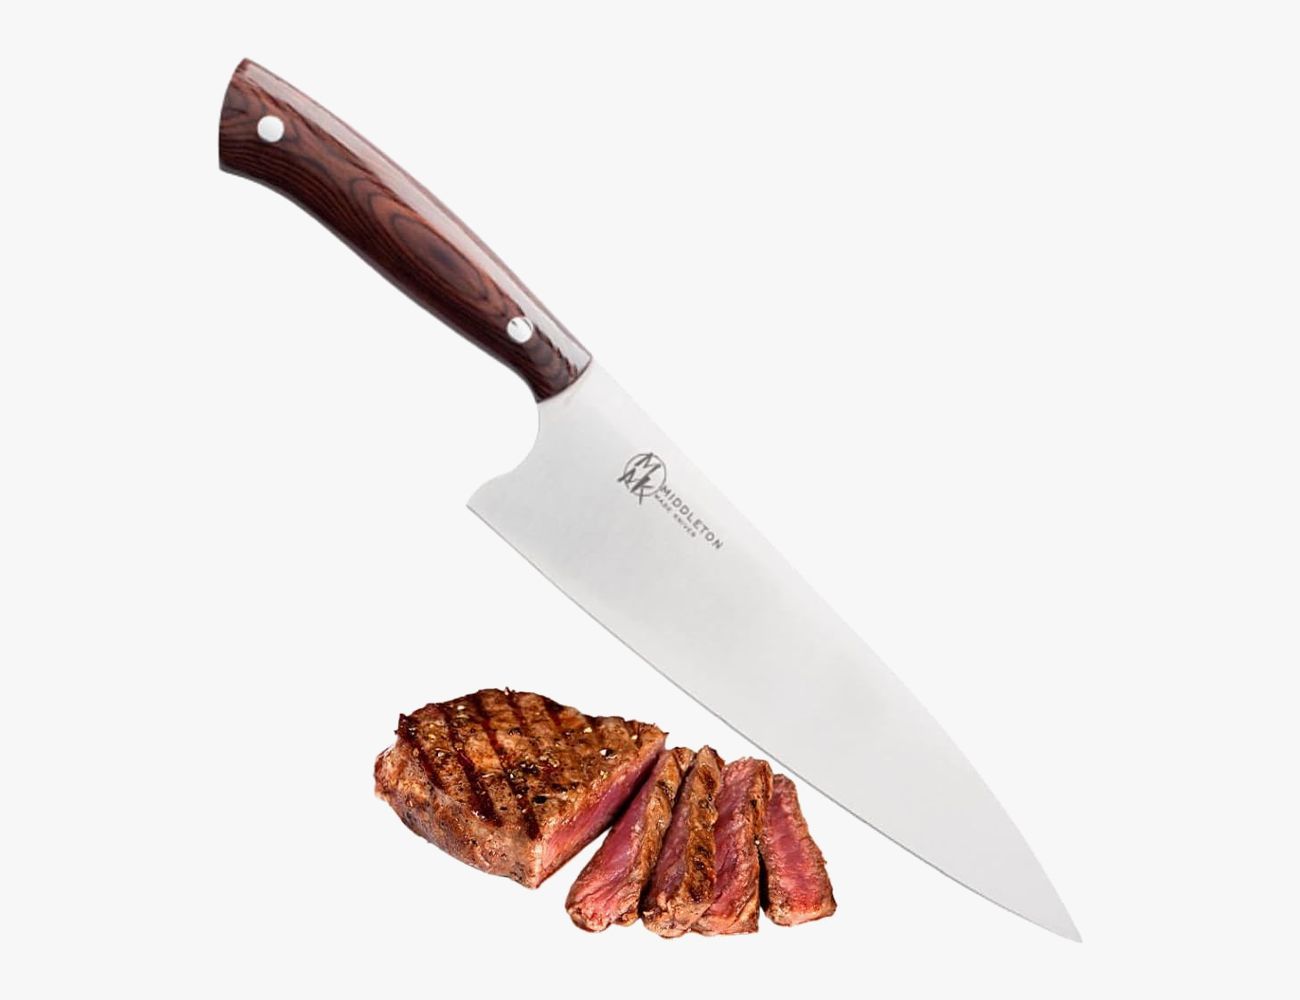 https://hips.hearstapps.com/vader-prod.s3.amazonaws.com/1698857494-1697129261-middleton-made-knives-echo-8-inch-chef-knife-652823231aa74.jpg